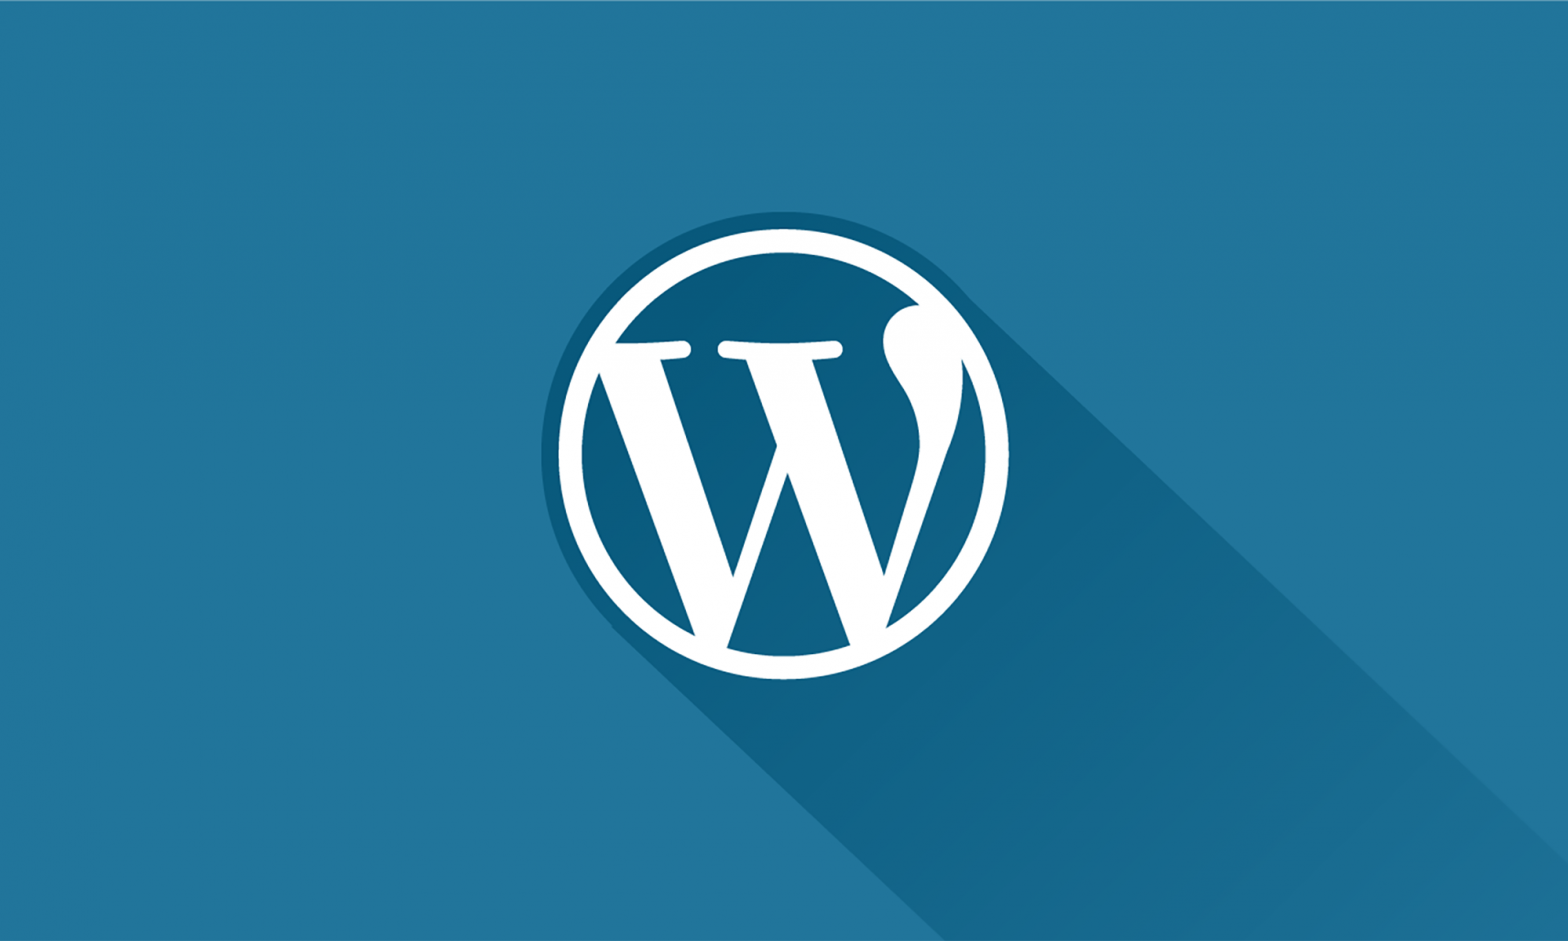 WordPress: WP-Syntax – Pre/Code